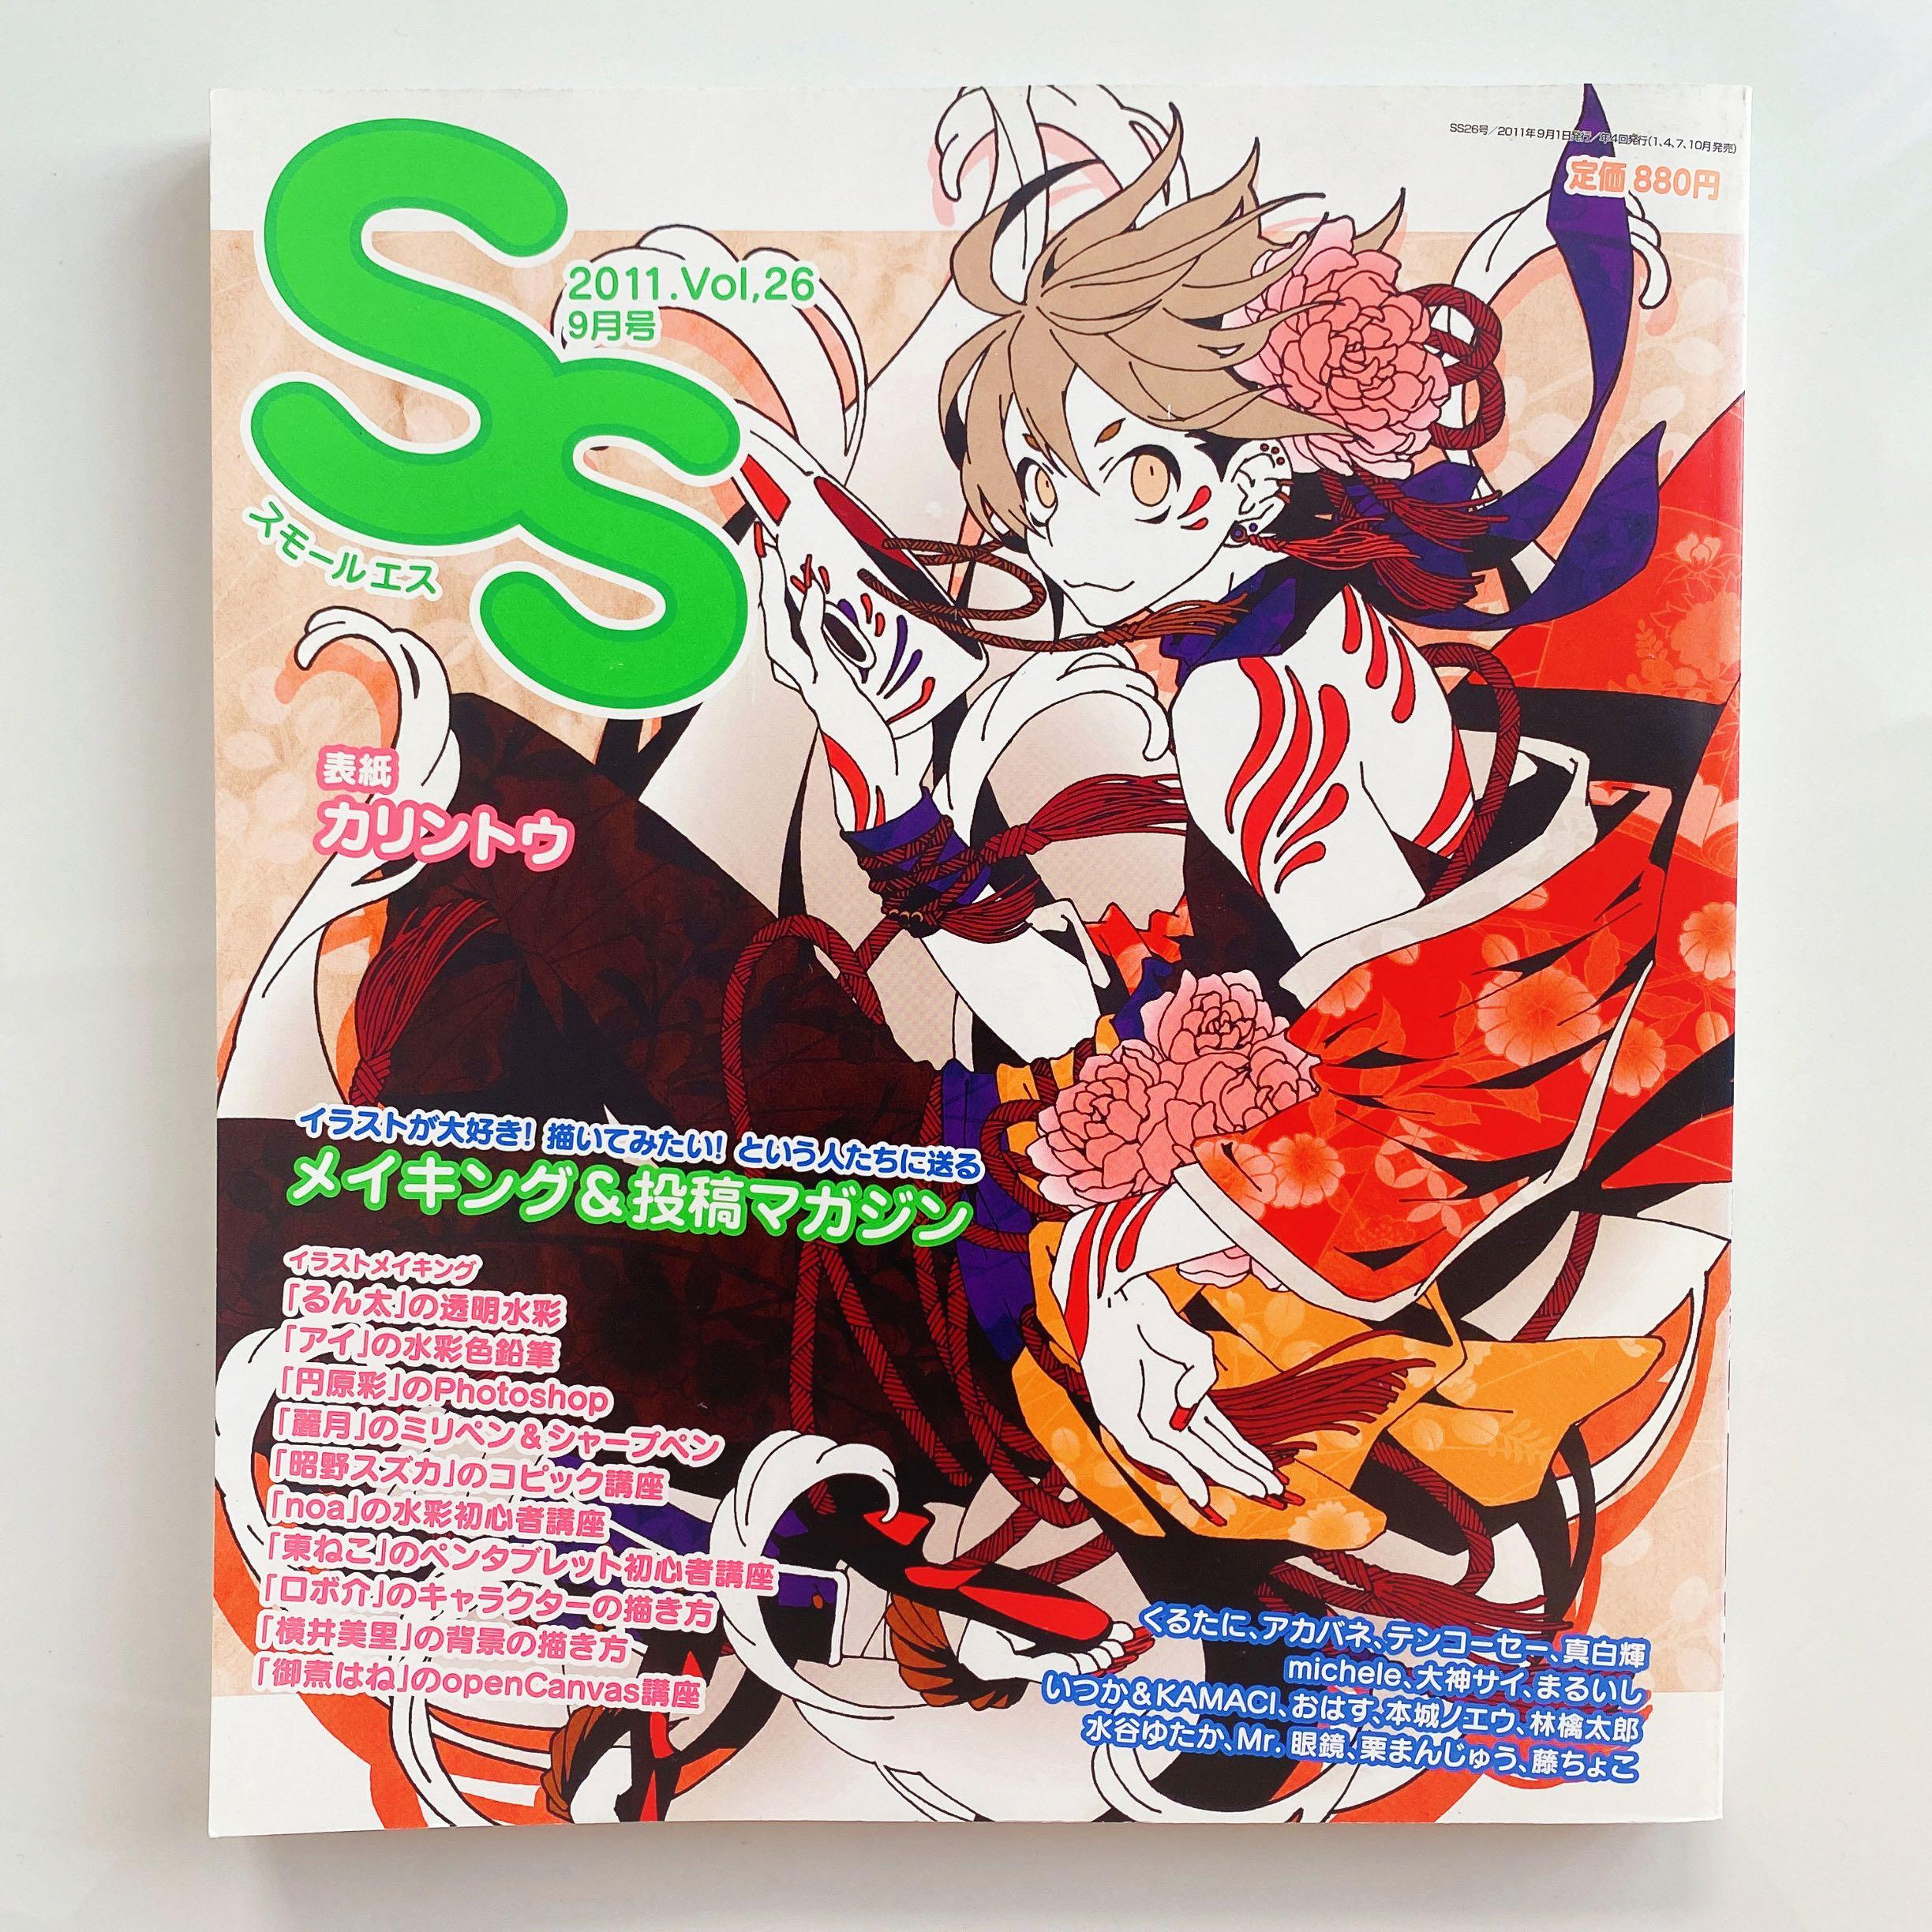 Art Illustration Japanese Artbook Ss Magazine Volume 26 Anime Visual Hobbies Toys Books Magazines Magazines On Carousell